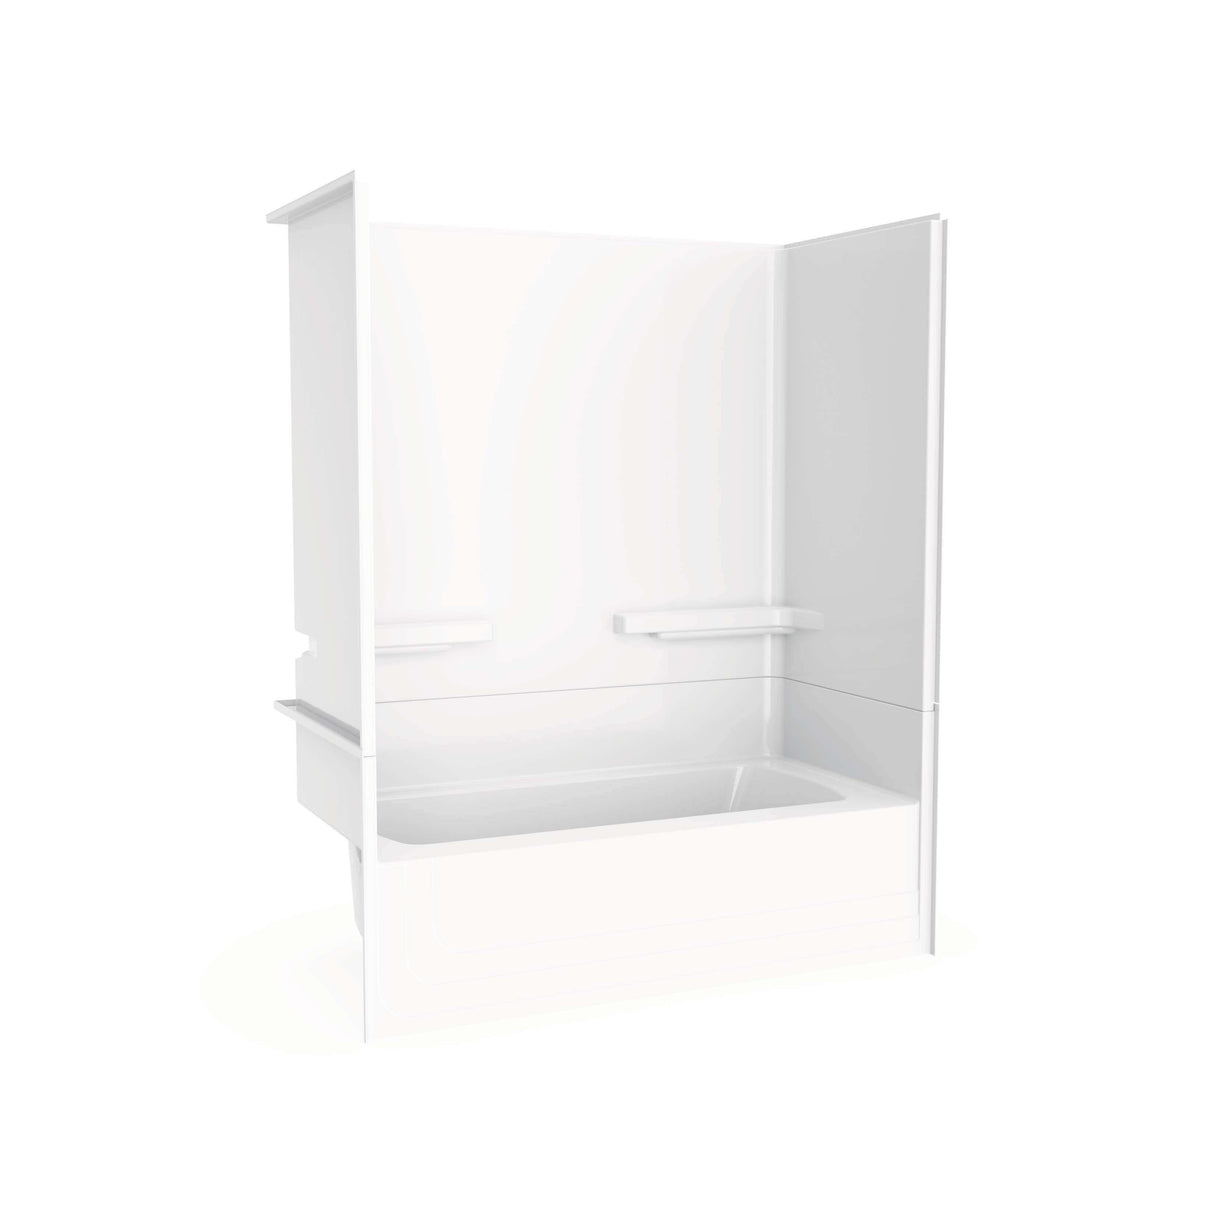 MAAX 101175-000-002-002 Monaco 60 x 31 AcrylX Alcove Right-Hand Drain Two-Piece Tub Shower in White